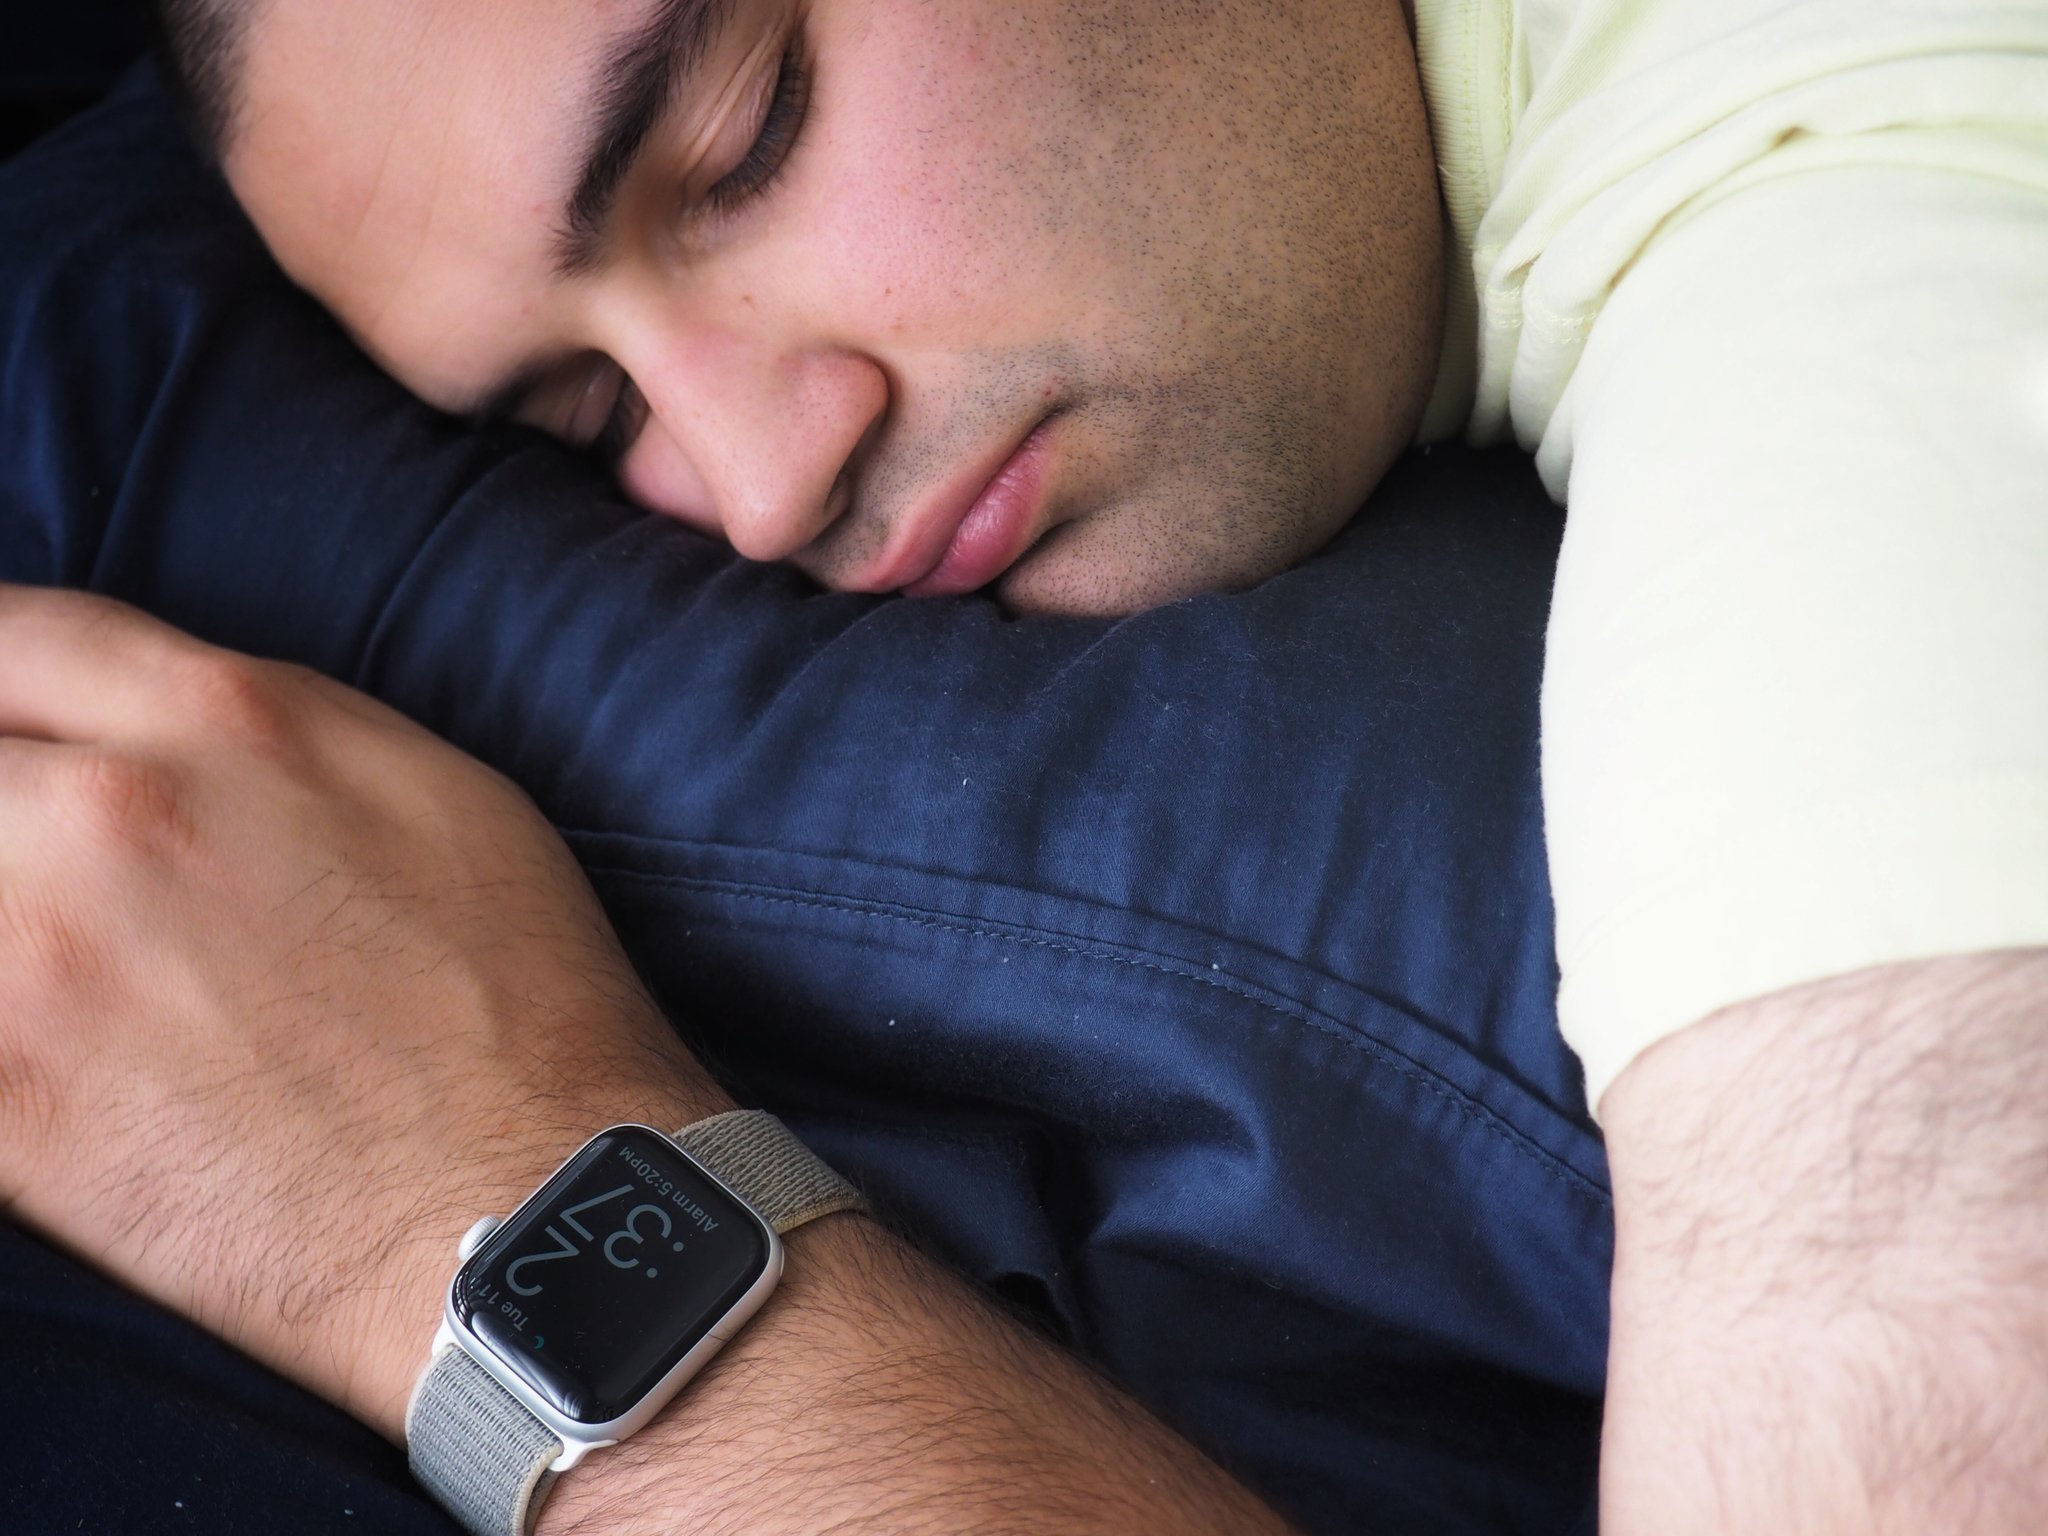 Apple Watch using Sleep app